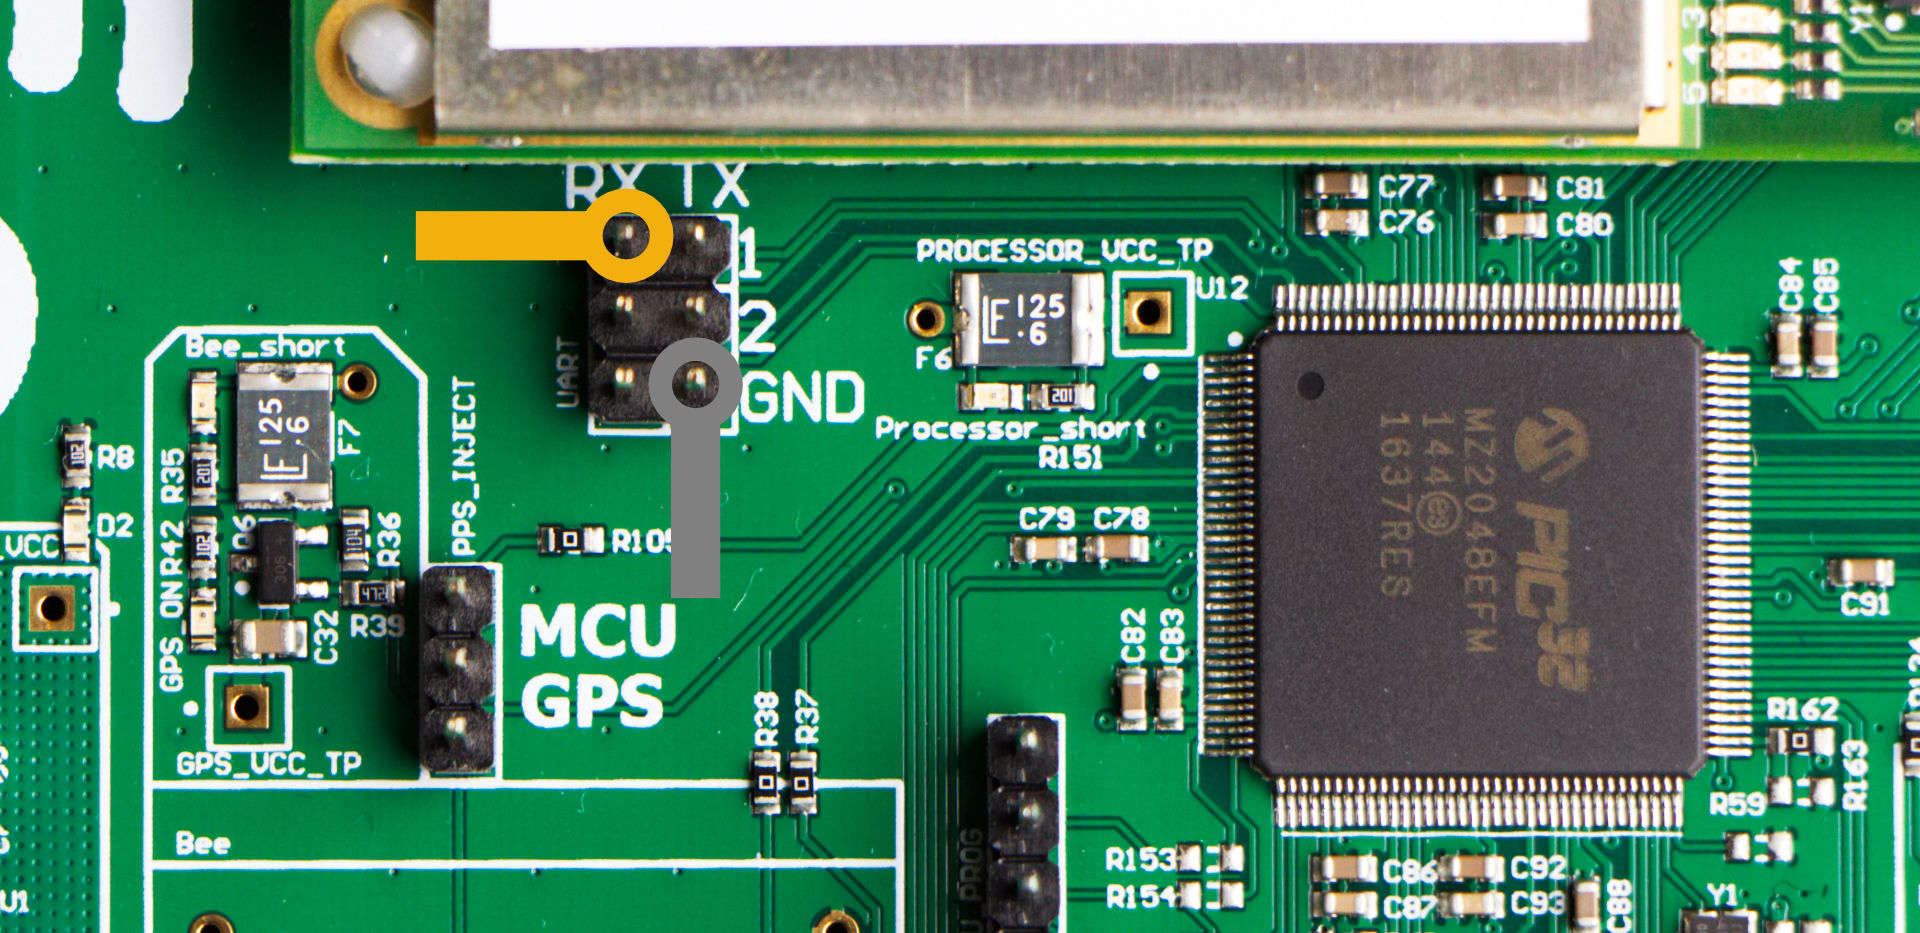 Gateway UART pins